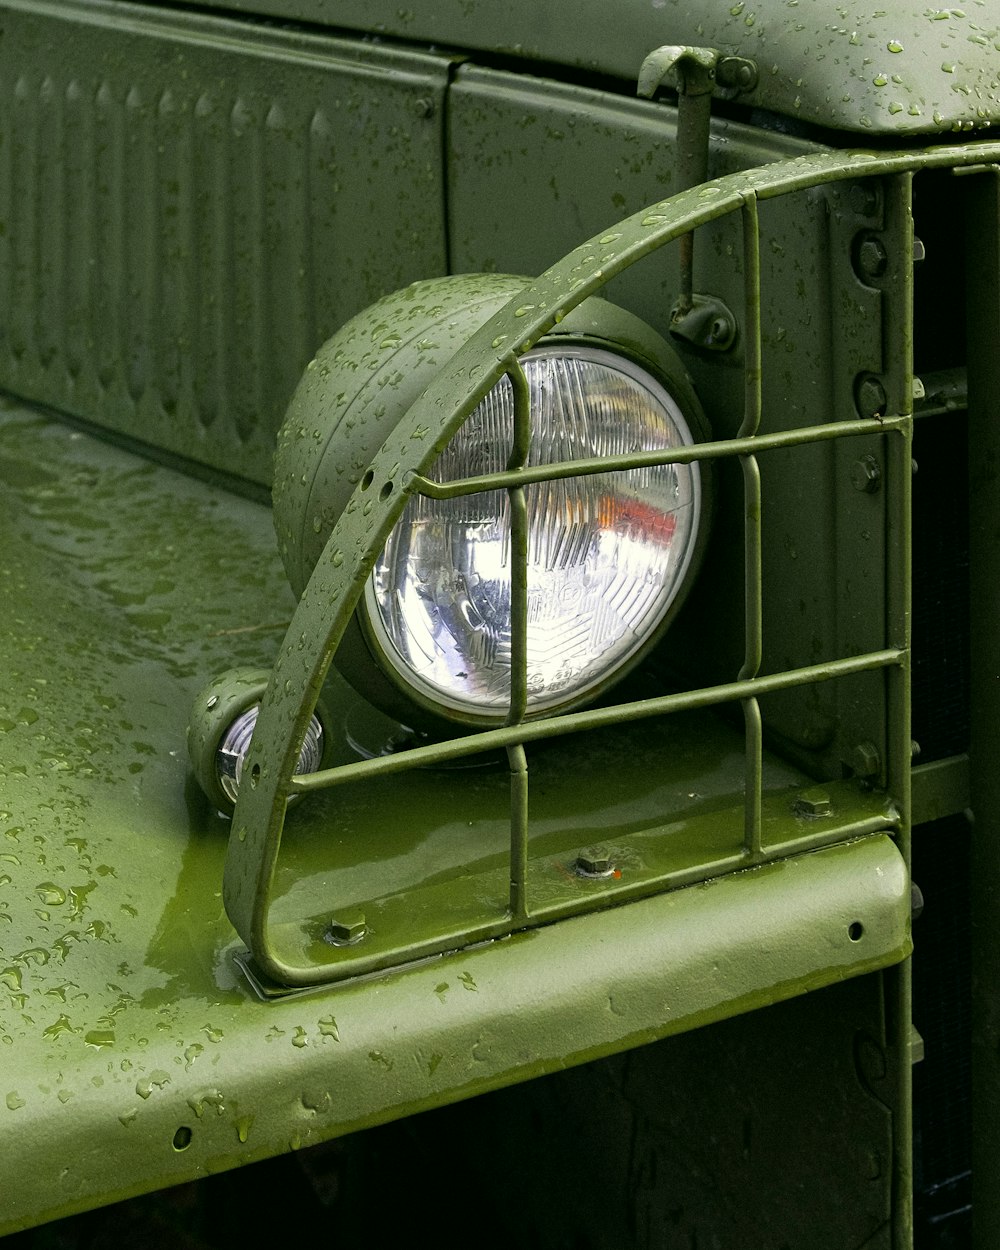 a close up of a light on a green truck